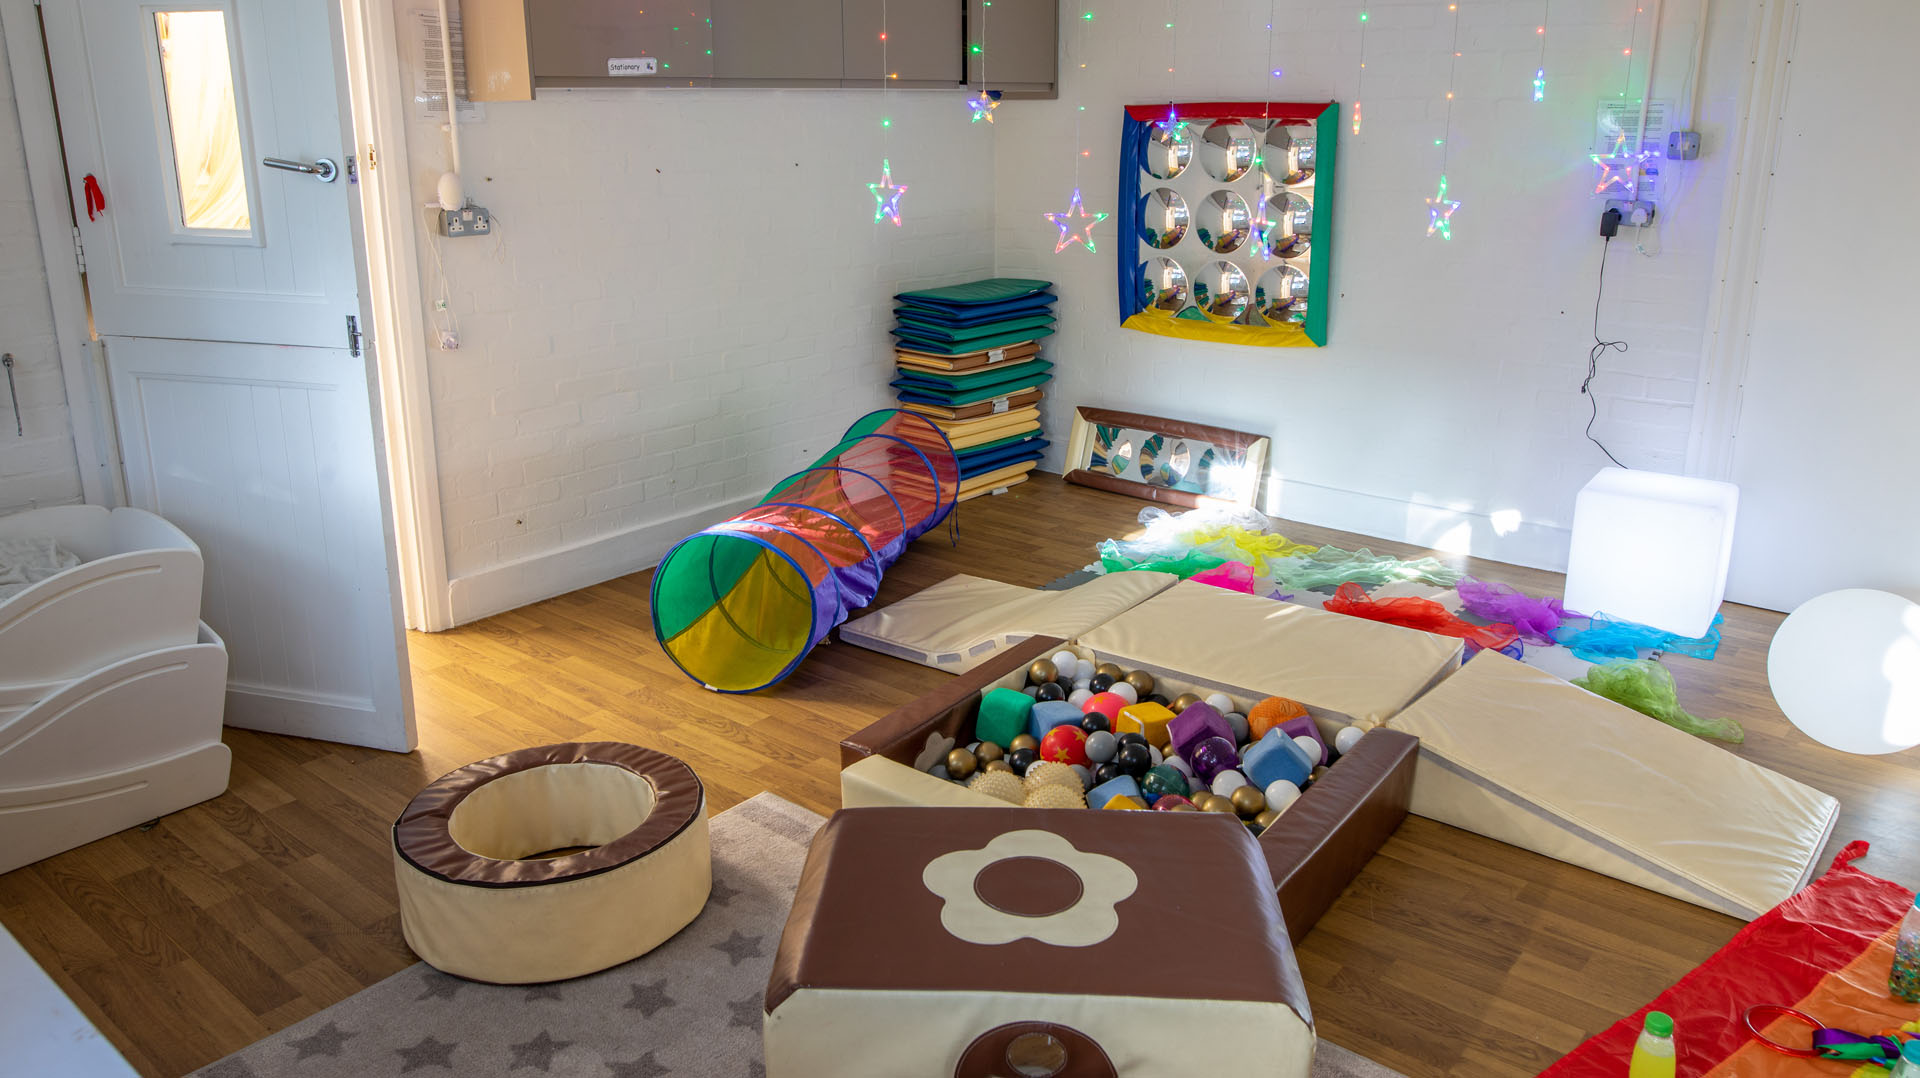 Maythorne Cottages Day Nursery and Preschool sensory room